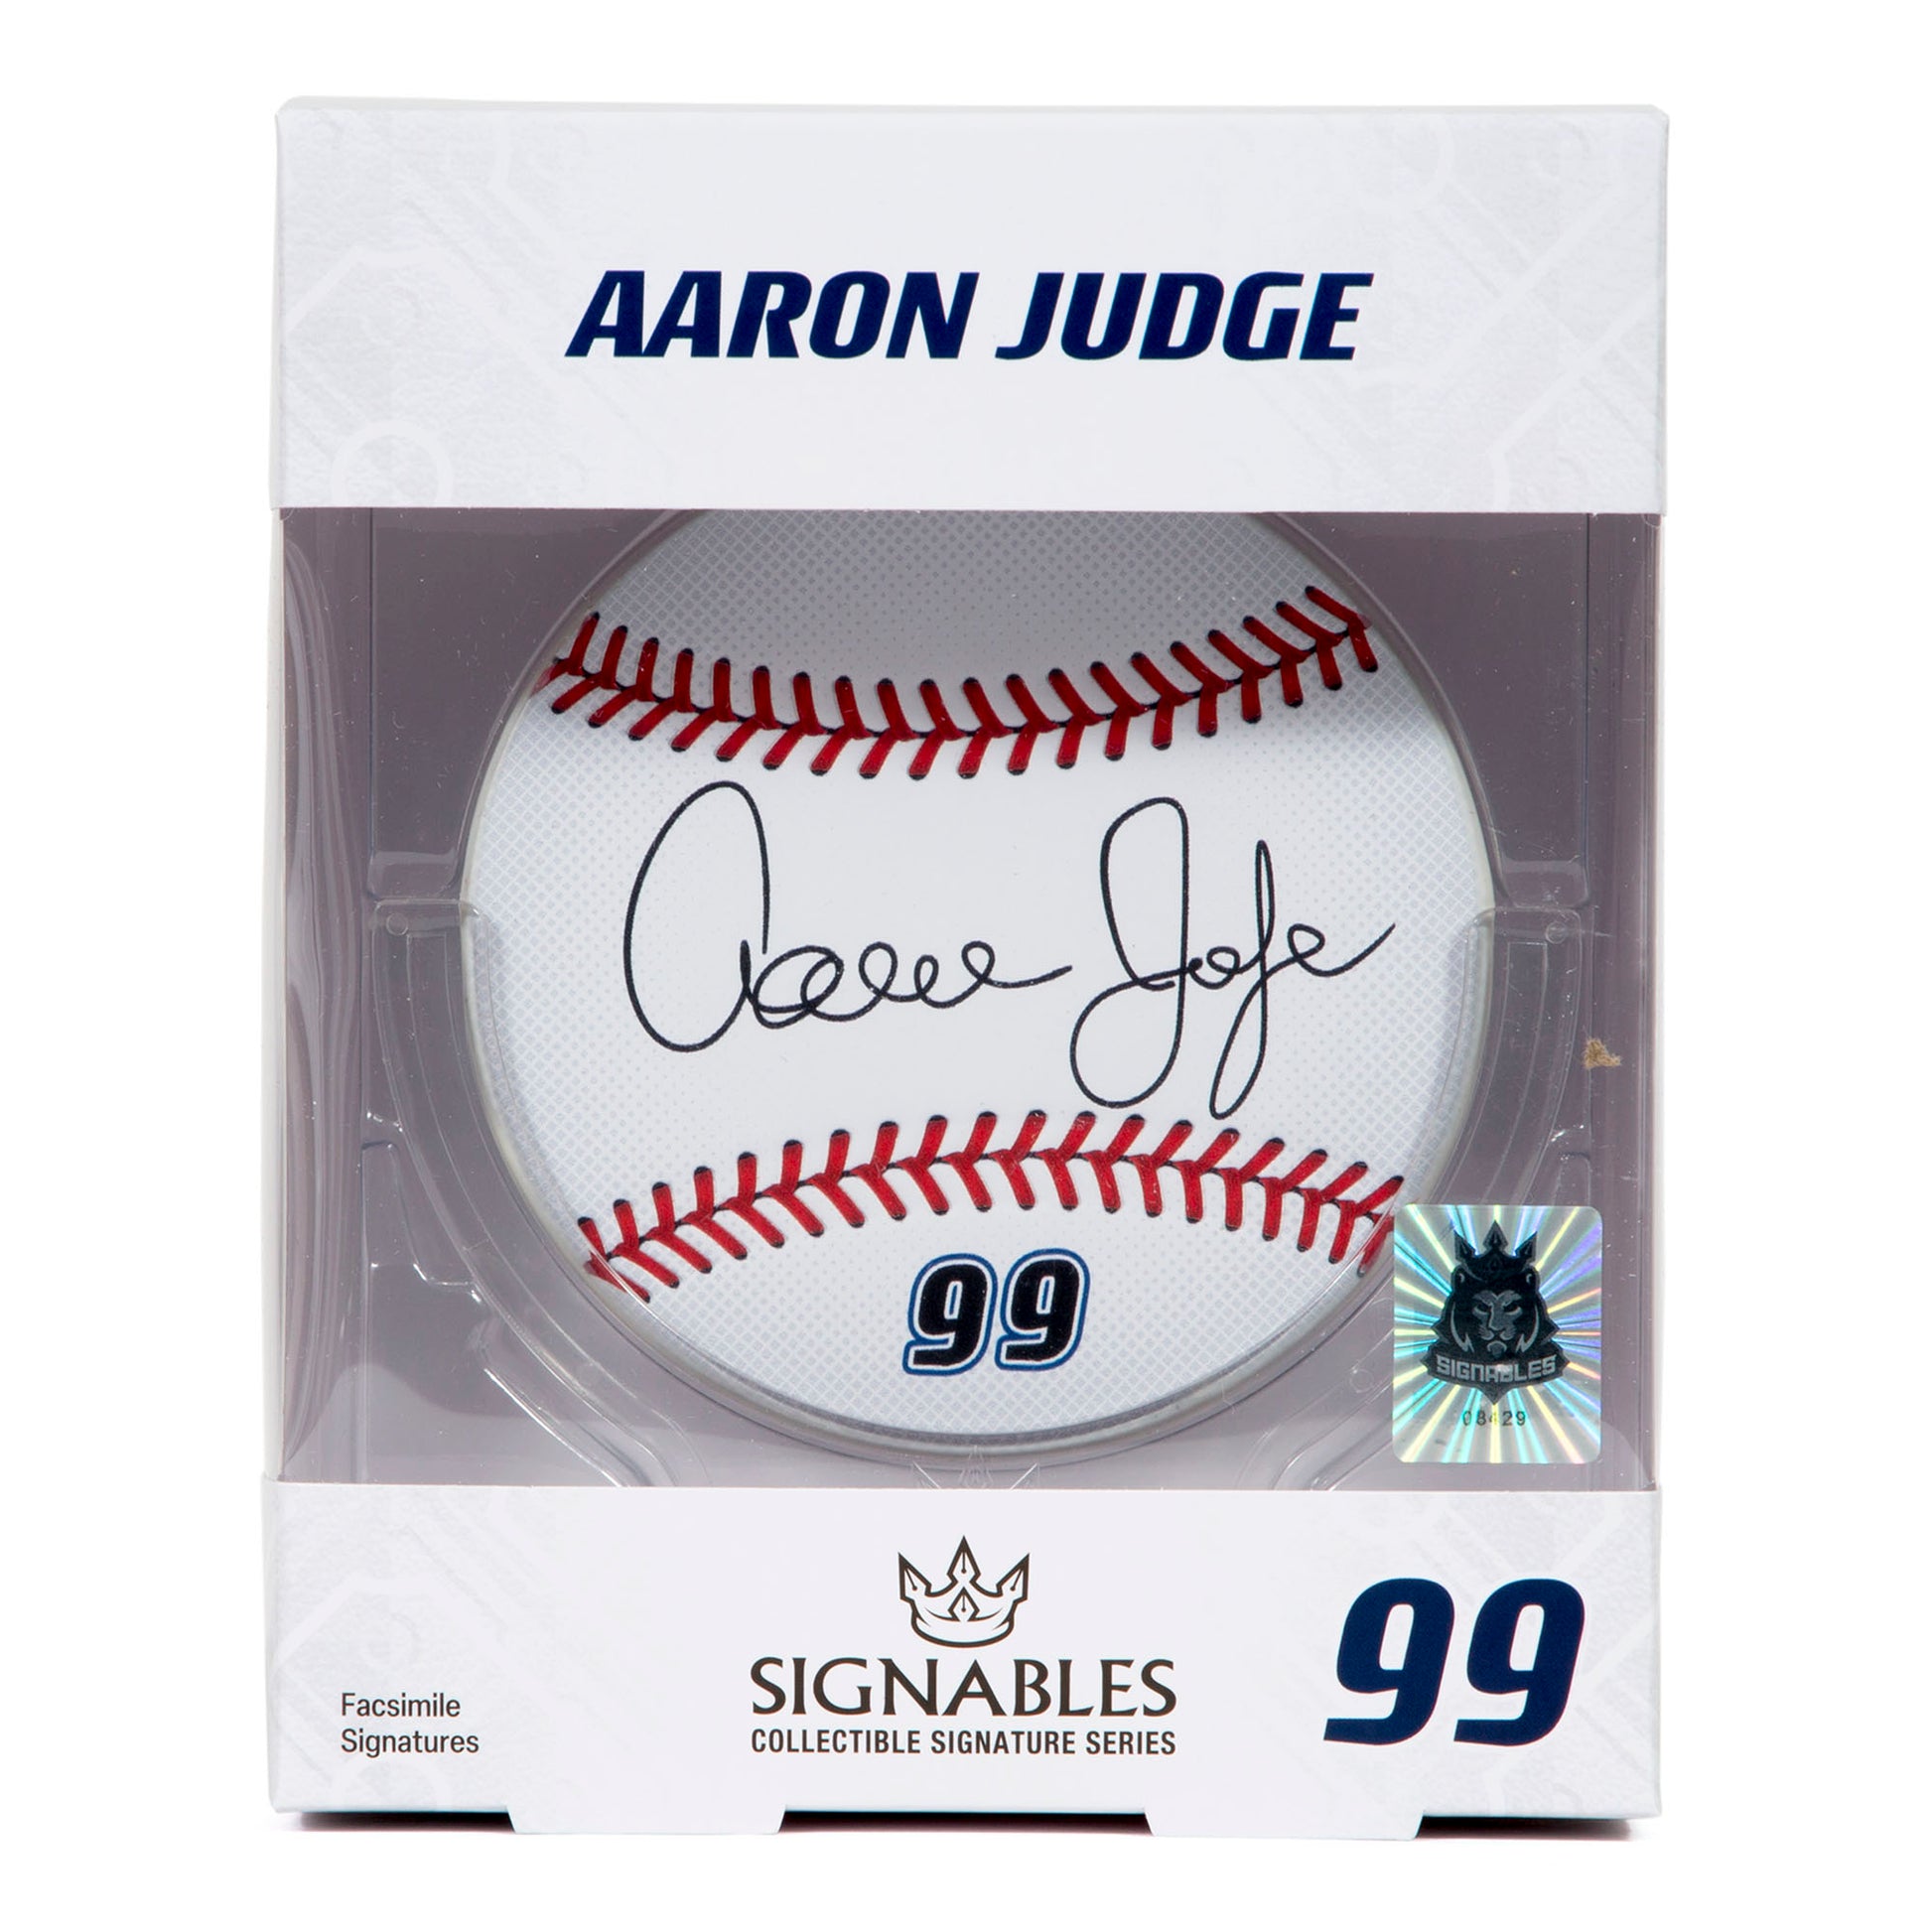 Aaron Judge Autographed Memorabilia  Signed Photo, Jersey, Collectibles &  Merchandise